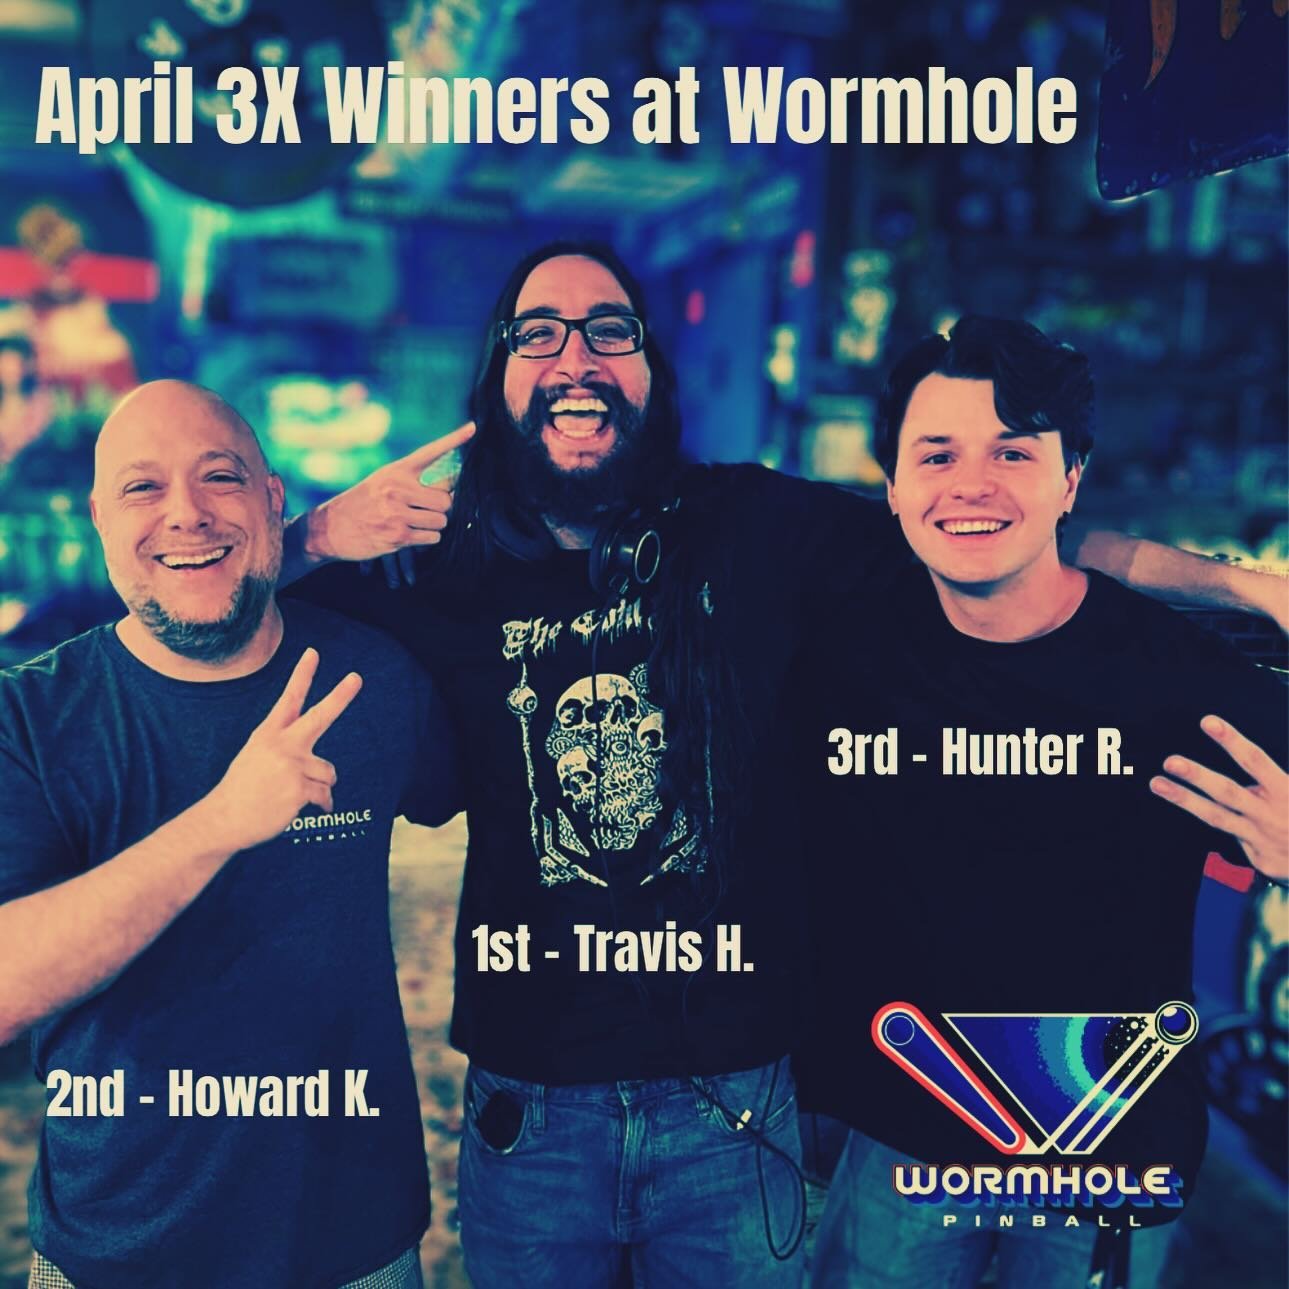 Monday brings $$$ at Wormhole for those big winners: Travis Hanna, Howard Kammerman, and Hunter Reed! @lordratington @slickhowie2